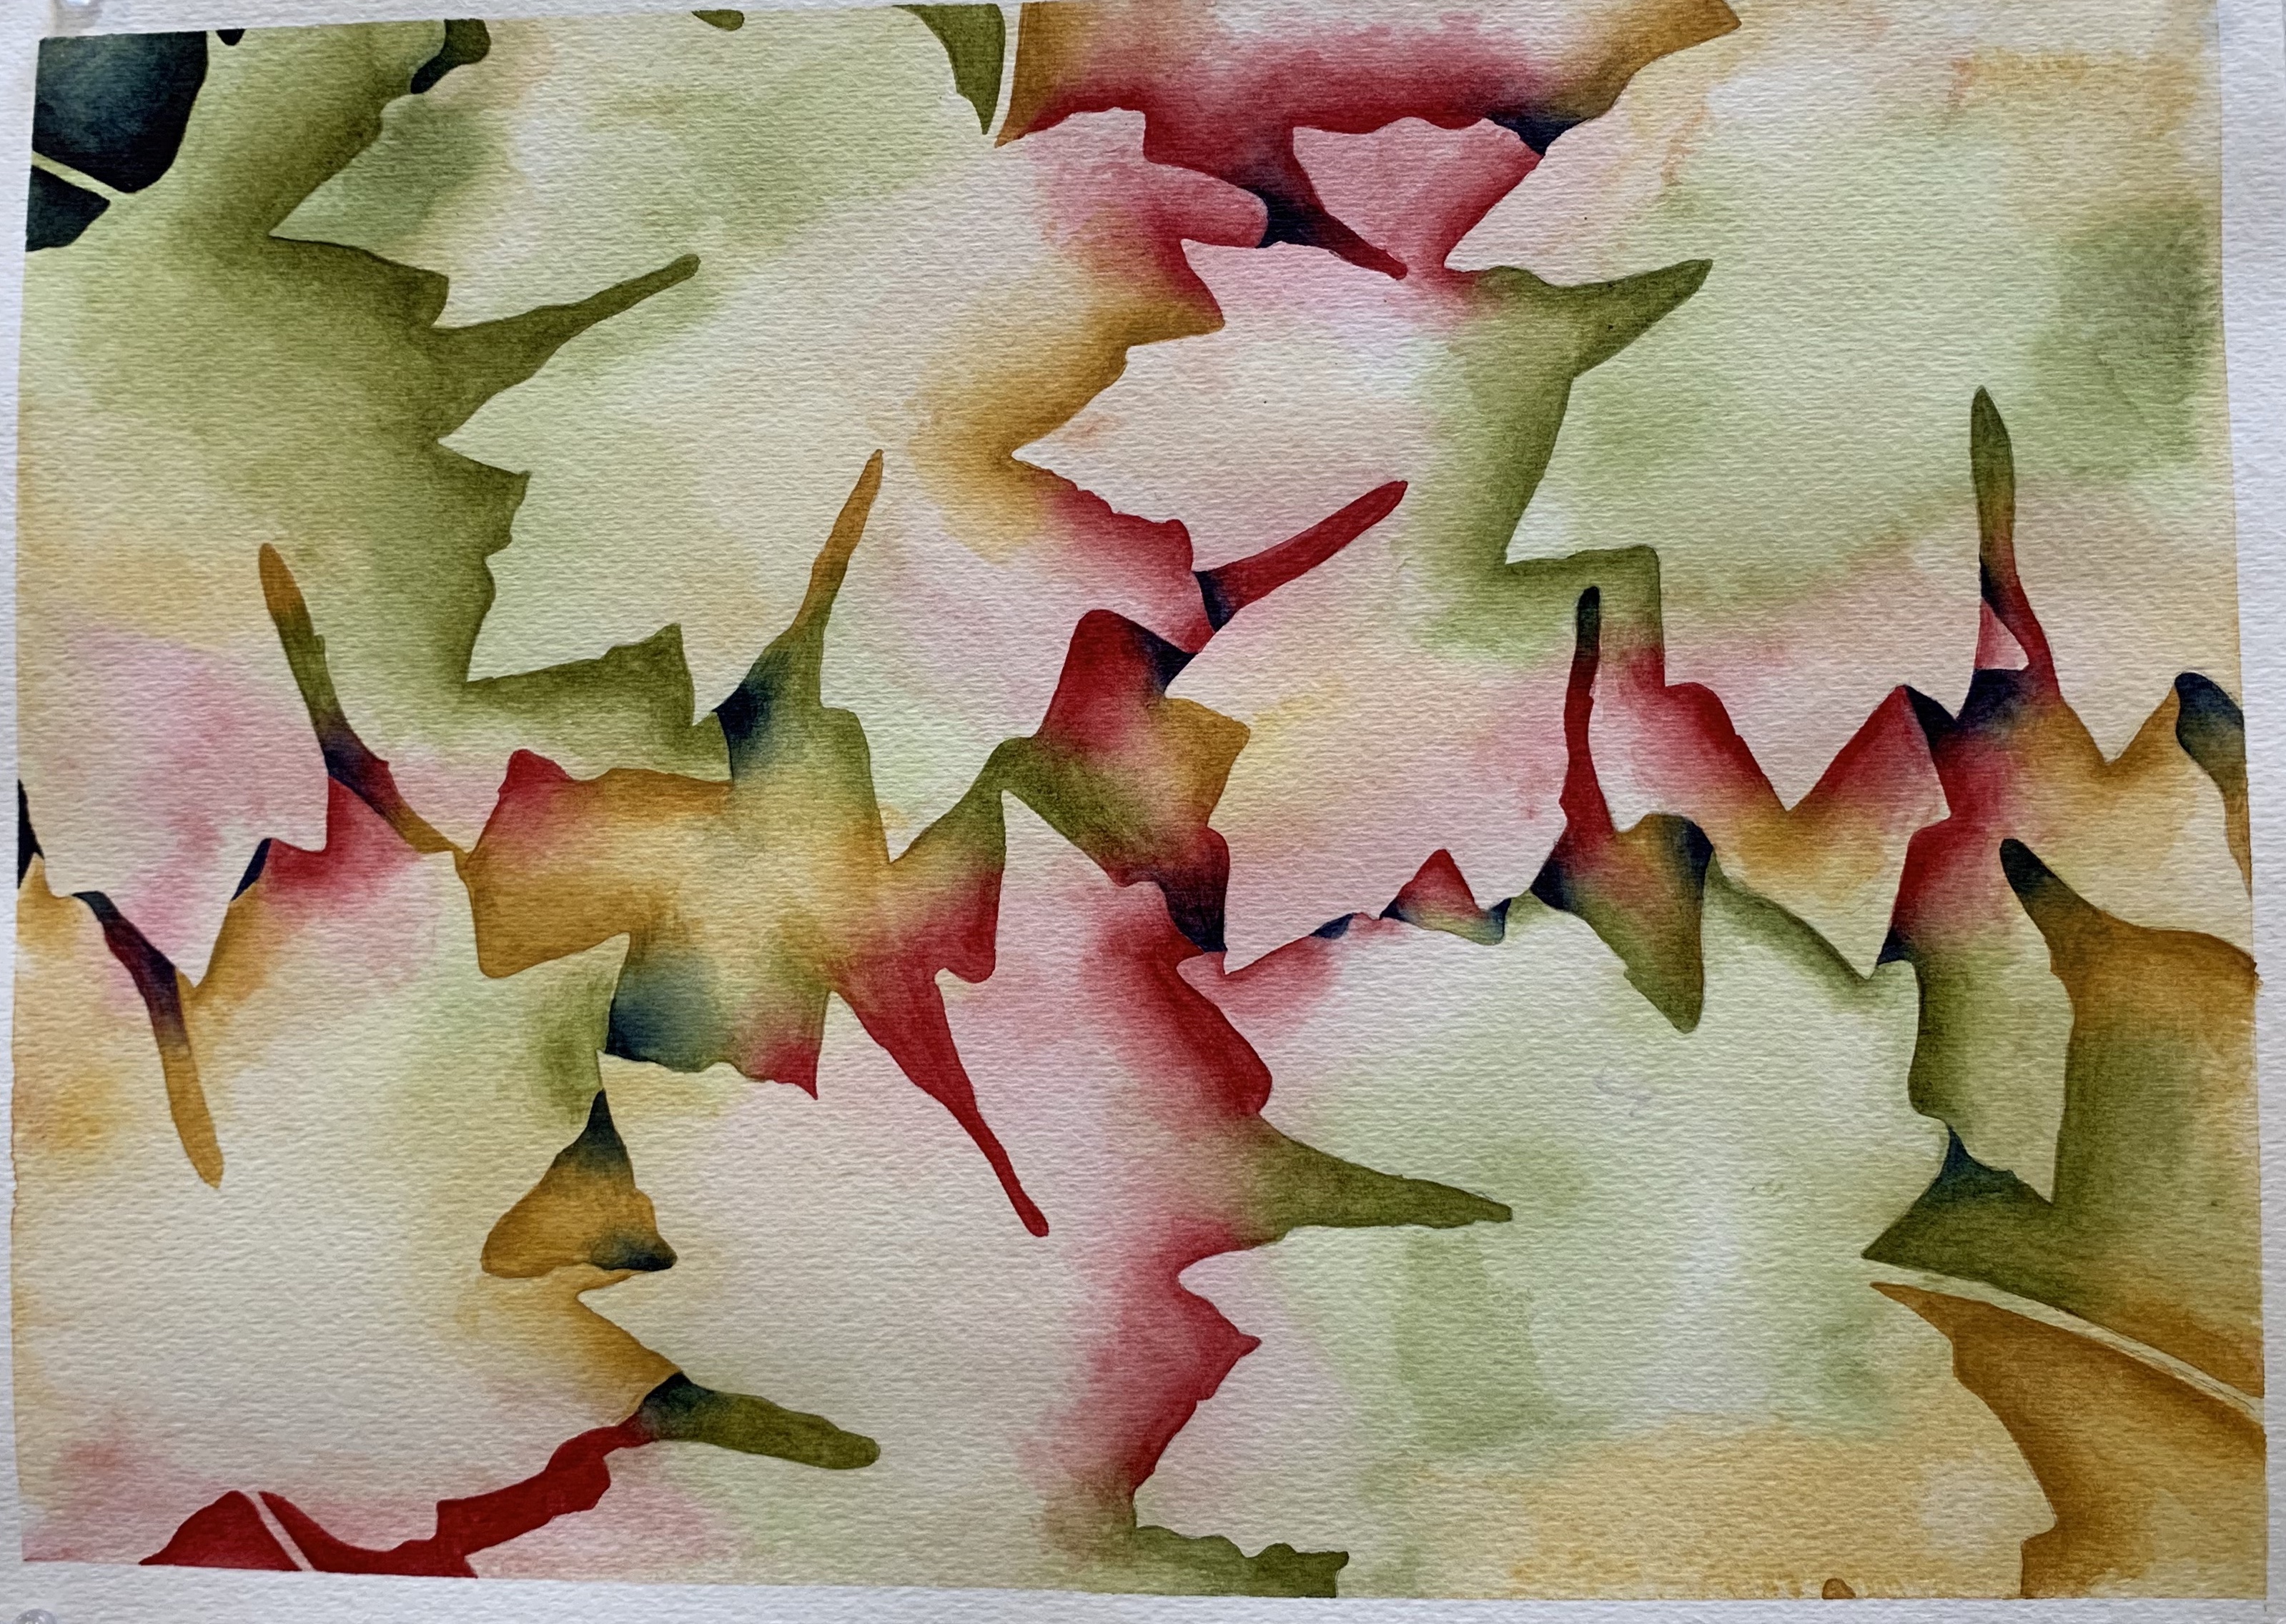 fall leaves watercolor